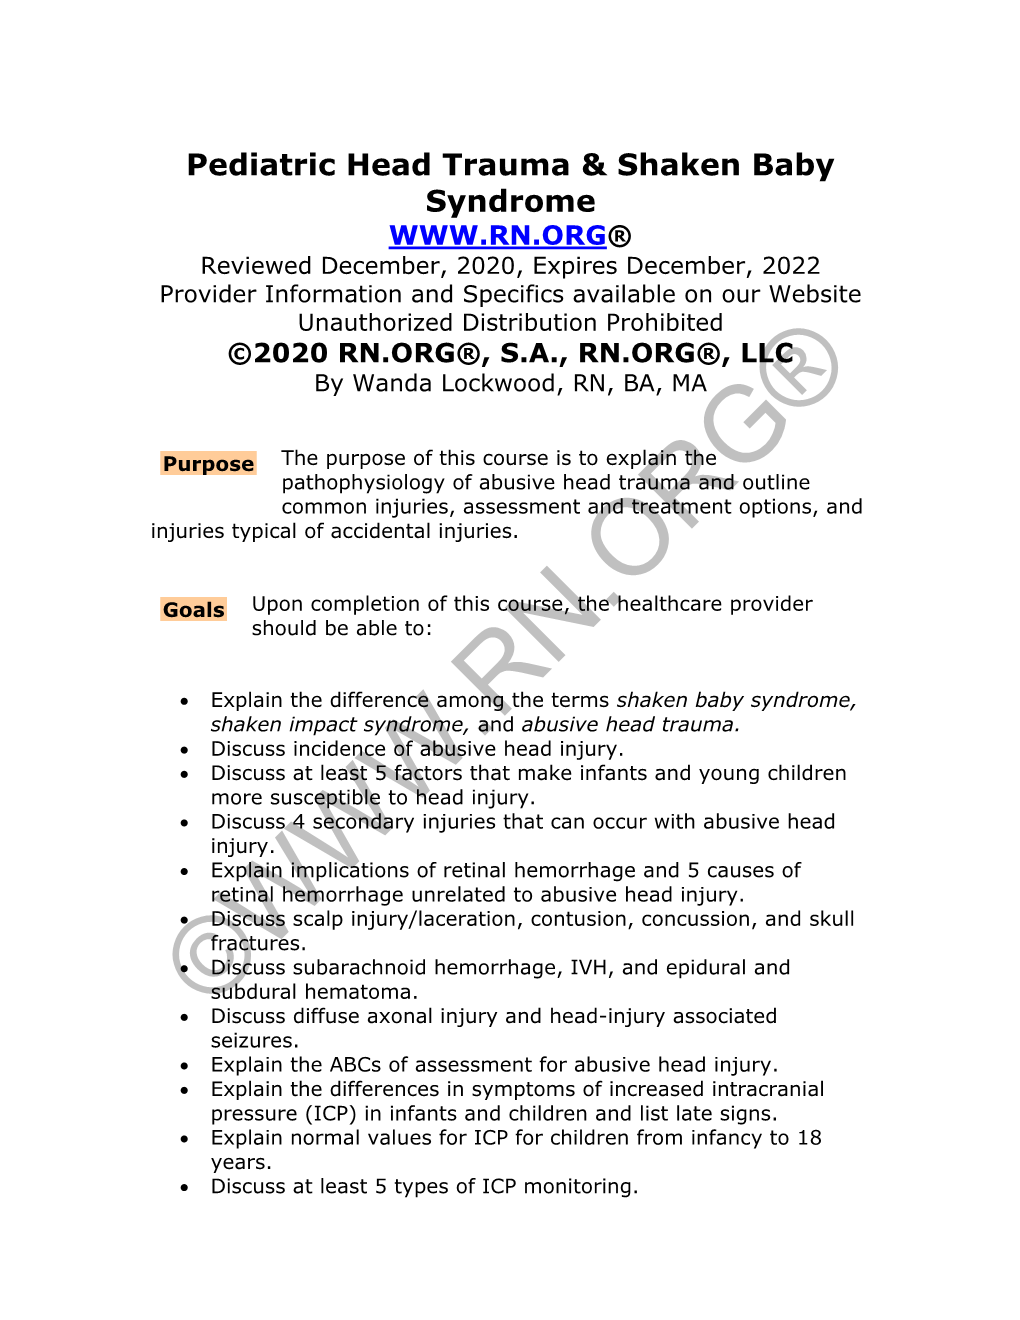 Pediatric Head Trauma & Shaken Baby Syndrome